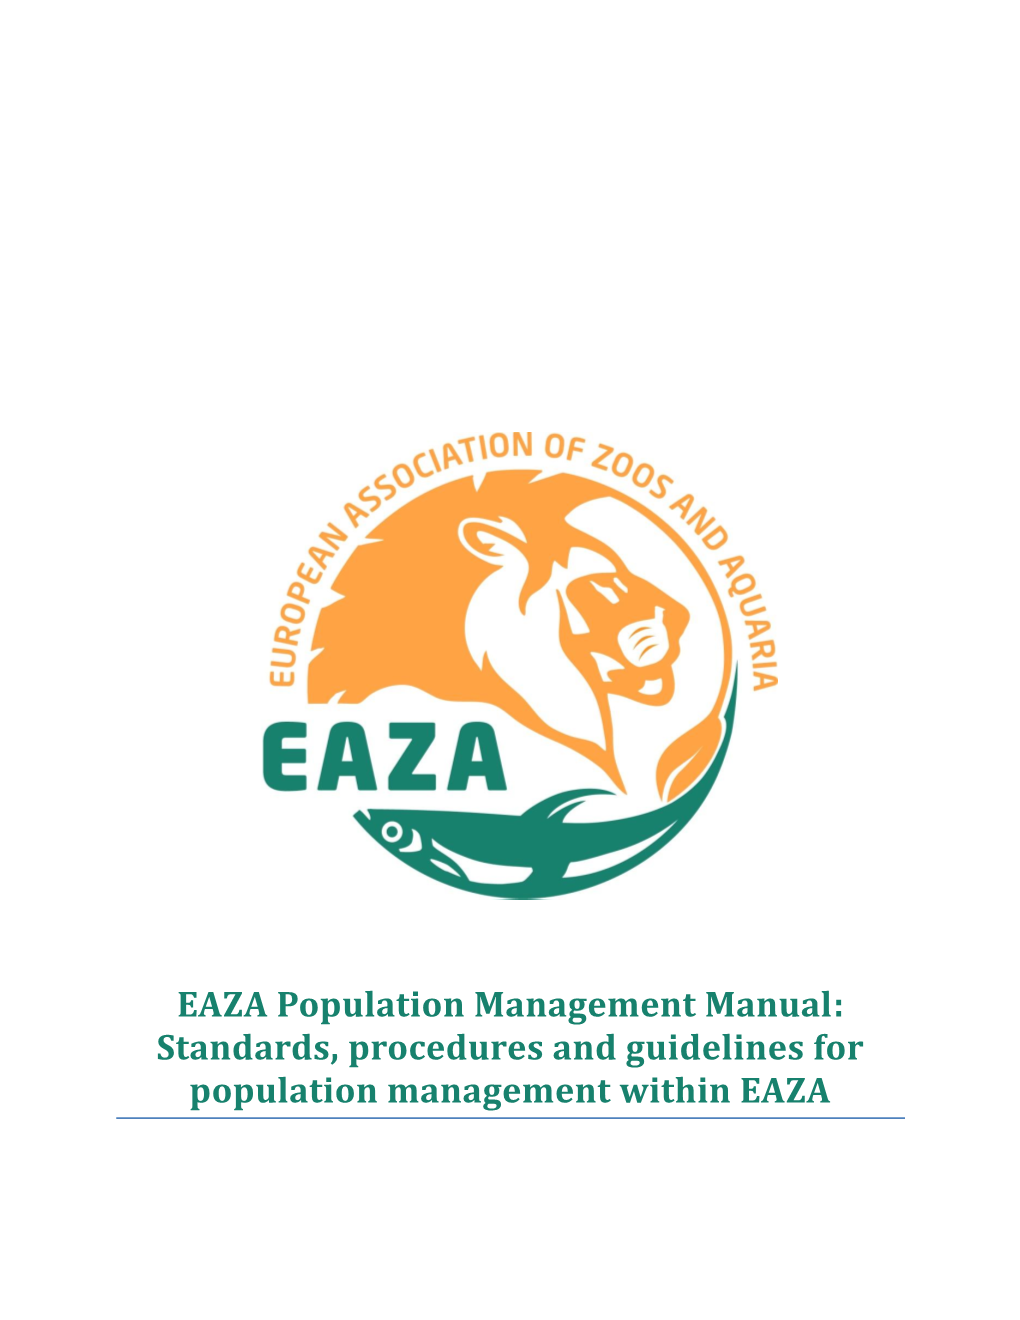 EAZA Population Management Manual: Standards, Procedures and Guidelines for Population Management Within EAZA